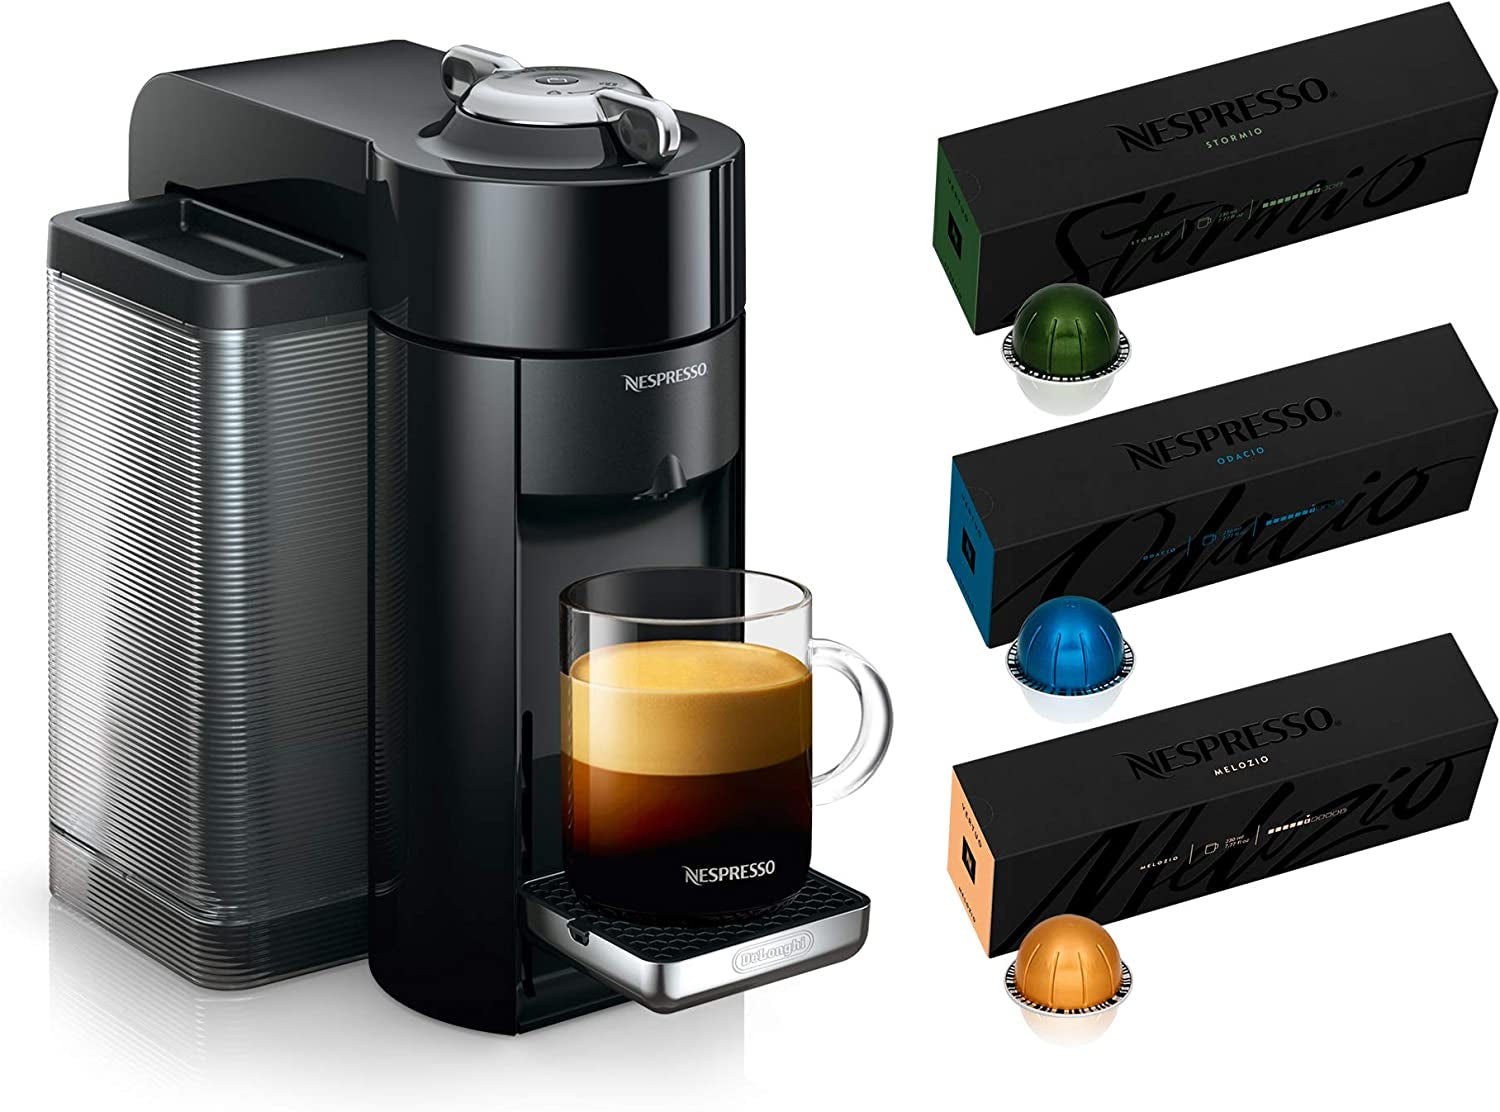 Vertuo Coffee and Espresso Machine by De'Longhi